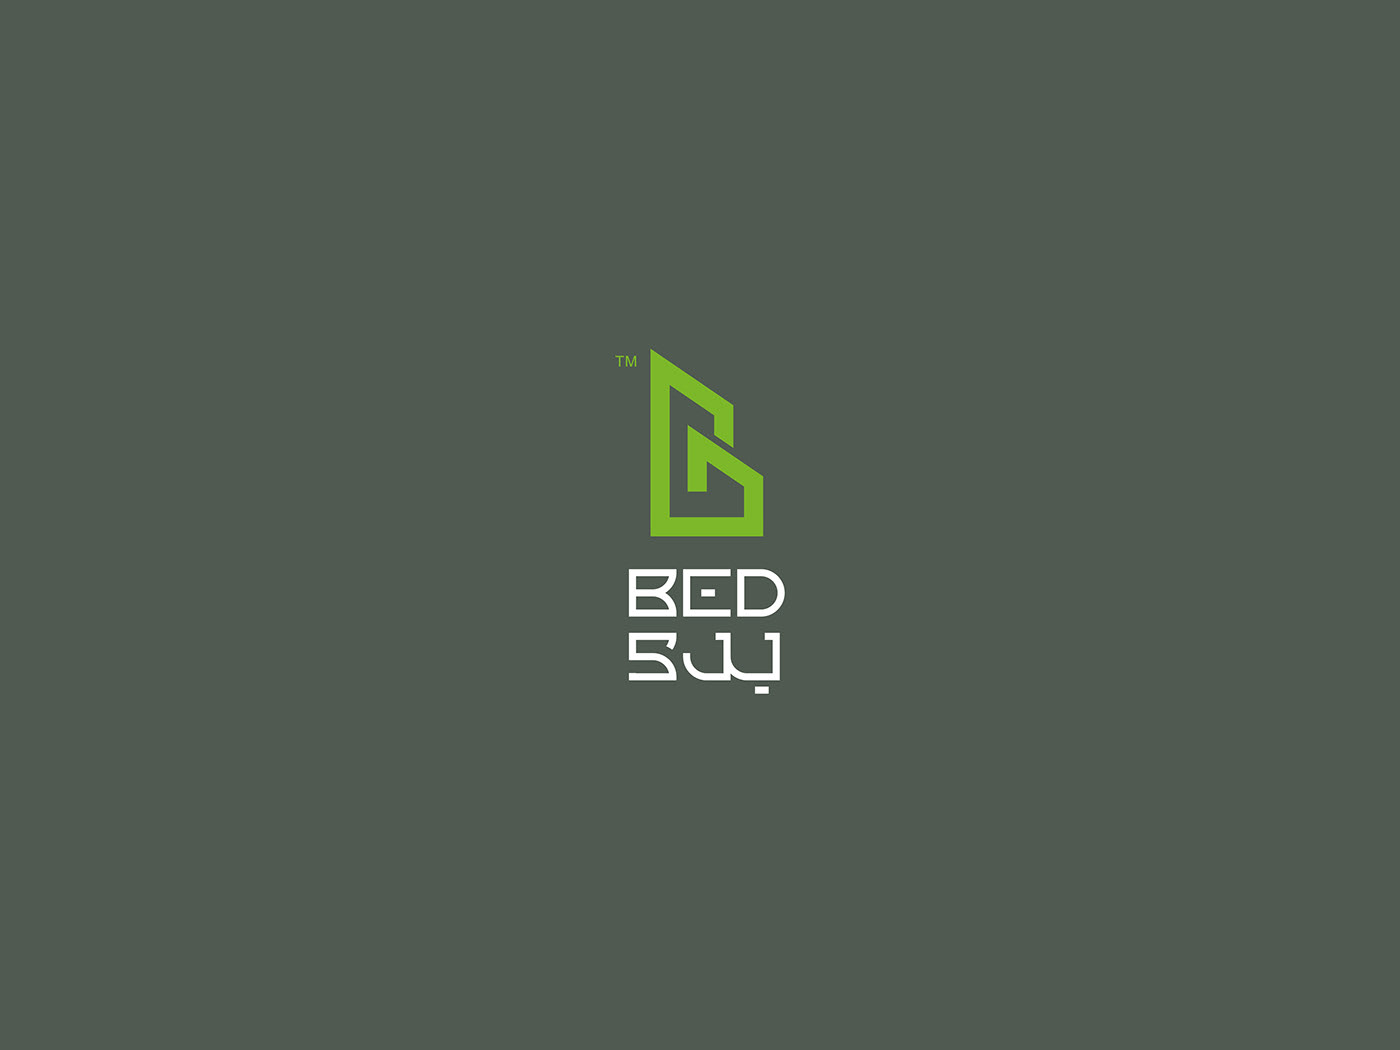 brand identity Logo Design Logotype Brand Design Golden Ratio Gaming Logo Mascot arabic typography serag basel بانر موقع